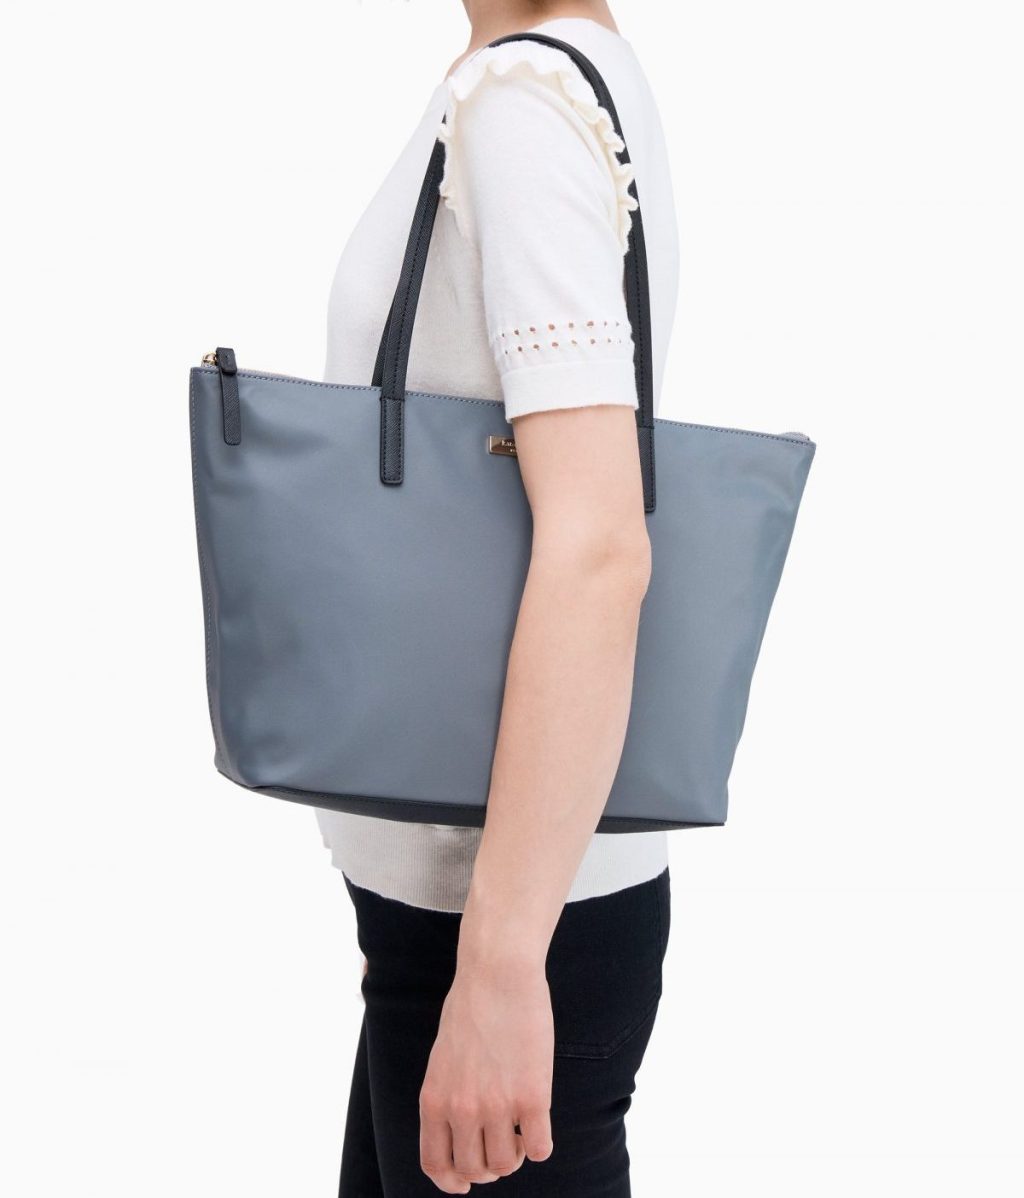 Kate Spade Handbags as Low as $49 Shipped + More